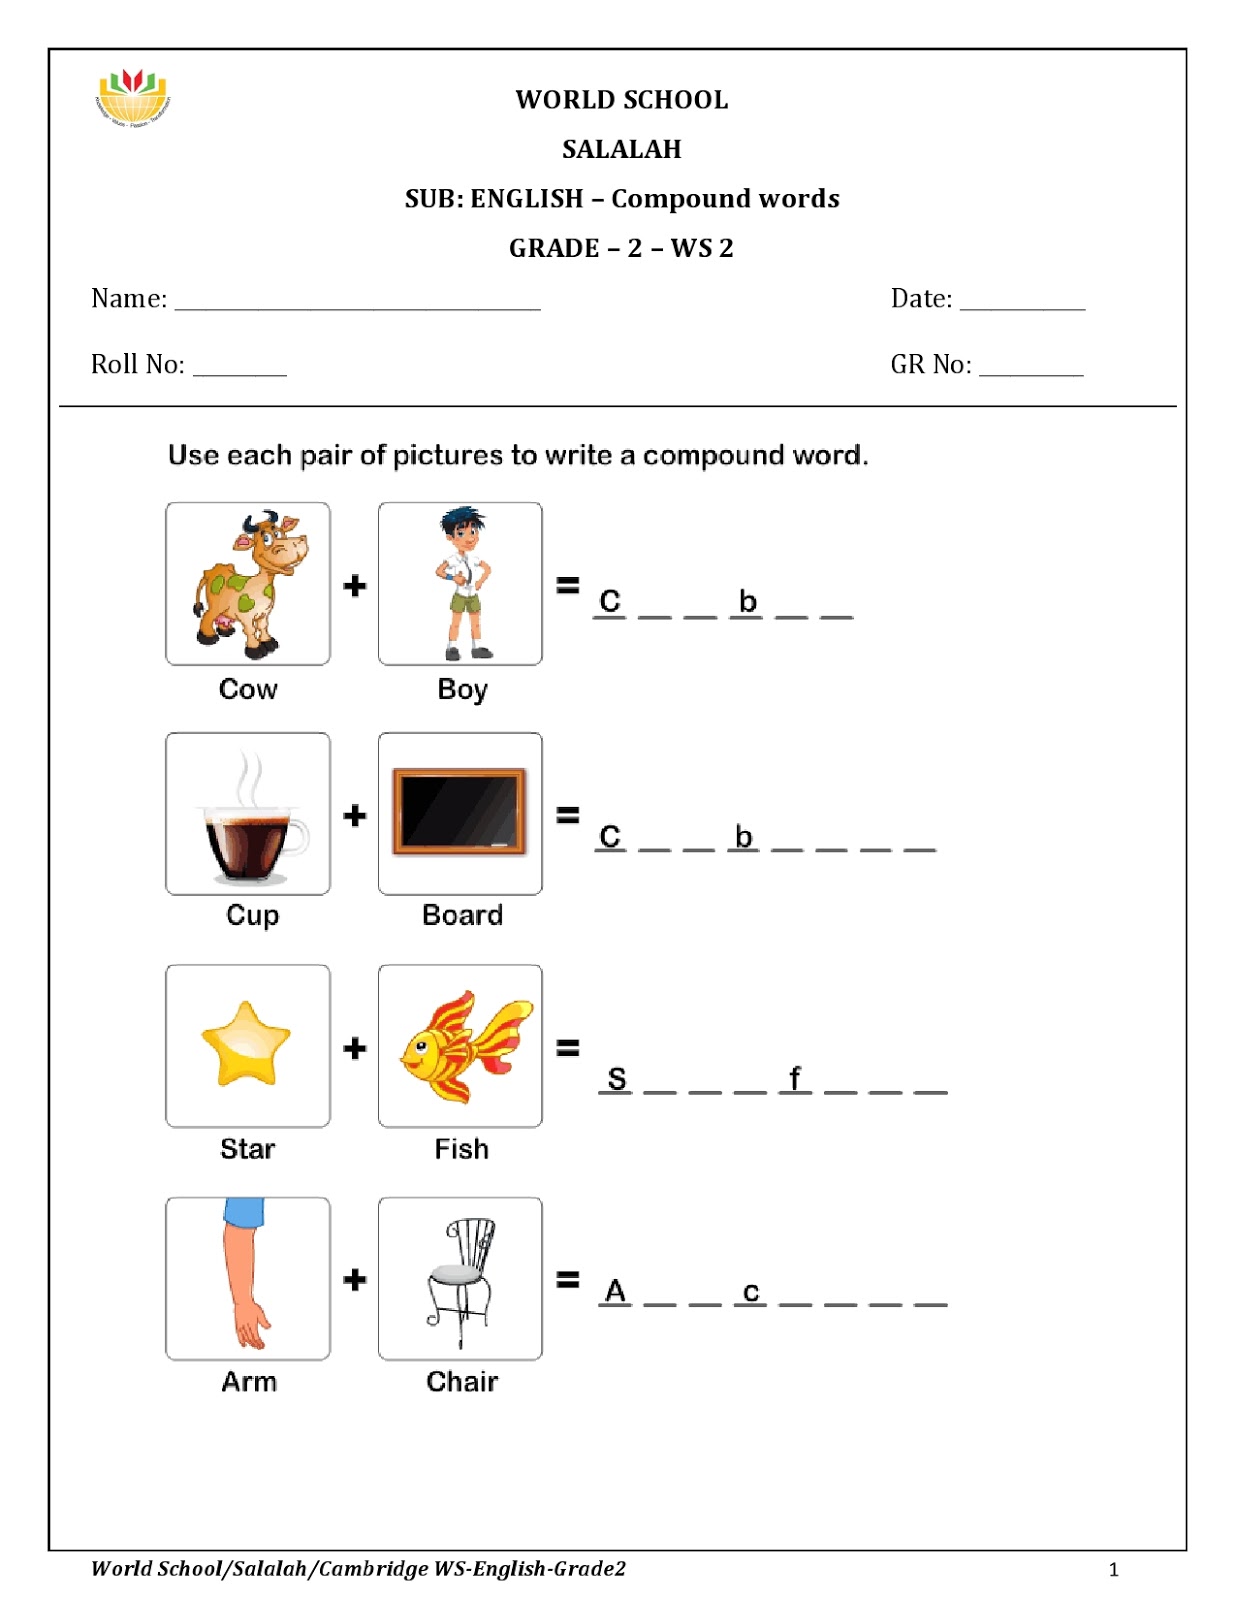 birla-world-school-oman-homework-for-grade-2-as-on-30-09-2018